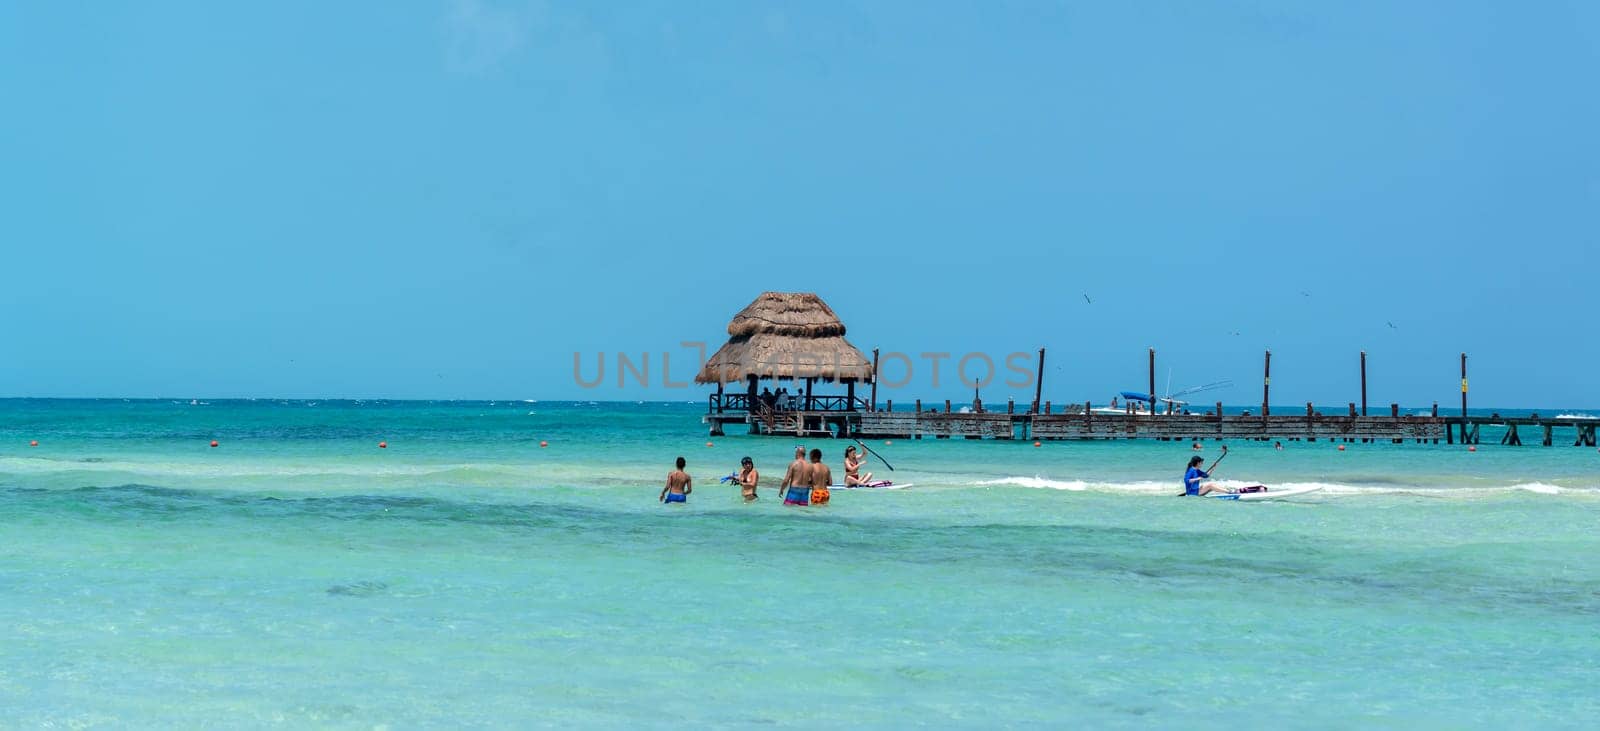 Isla Mujeres, Cancun, Mexico - September 13, 2021 - Beautiful Caribbean beach Playa Norte or North beach on Isla Mujeres near Cancun, Mexico